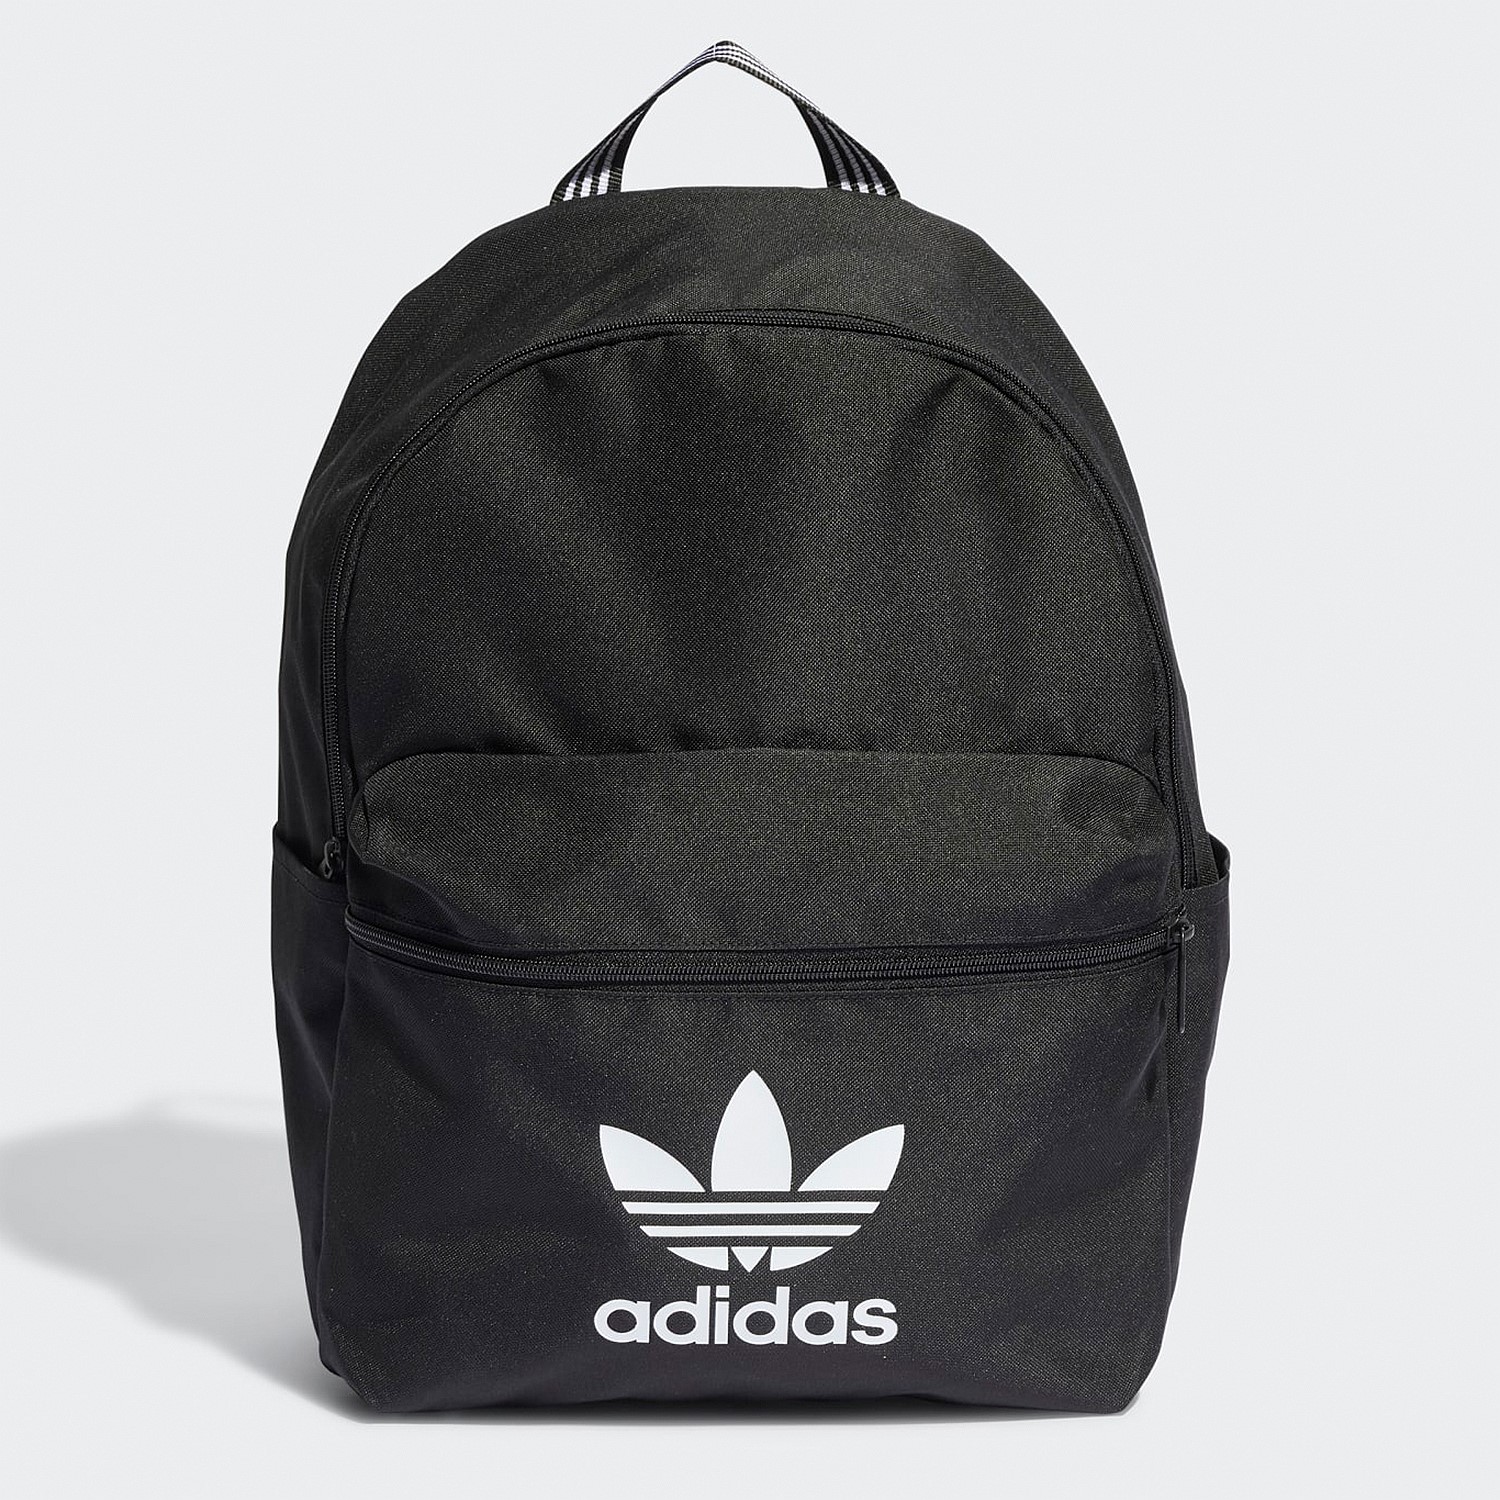 Adicolor Backpack | Bags | Stirling Sports